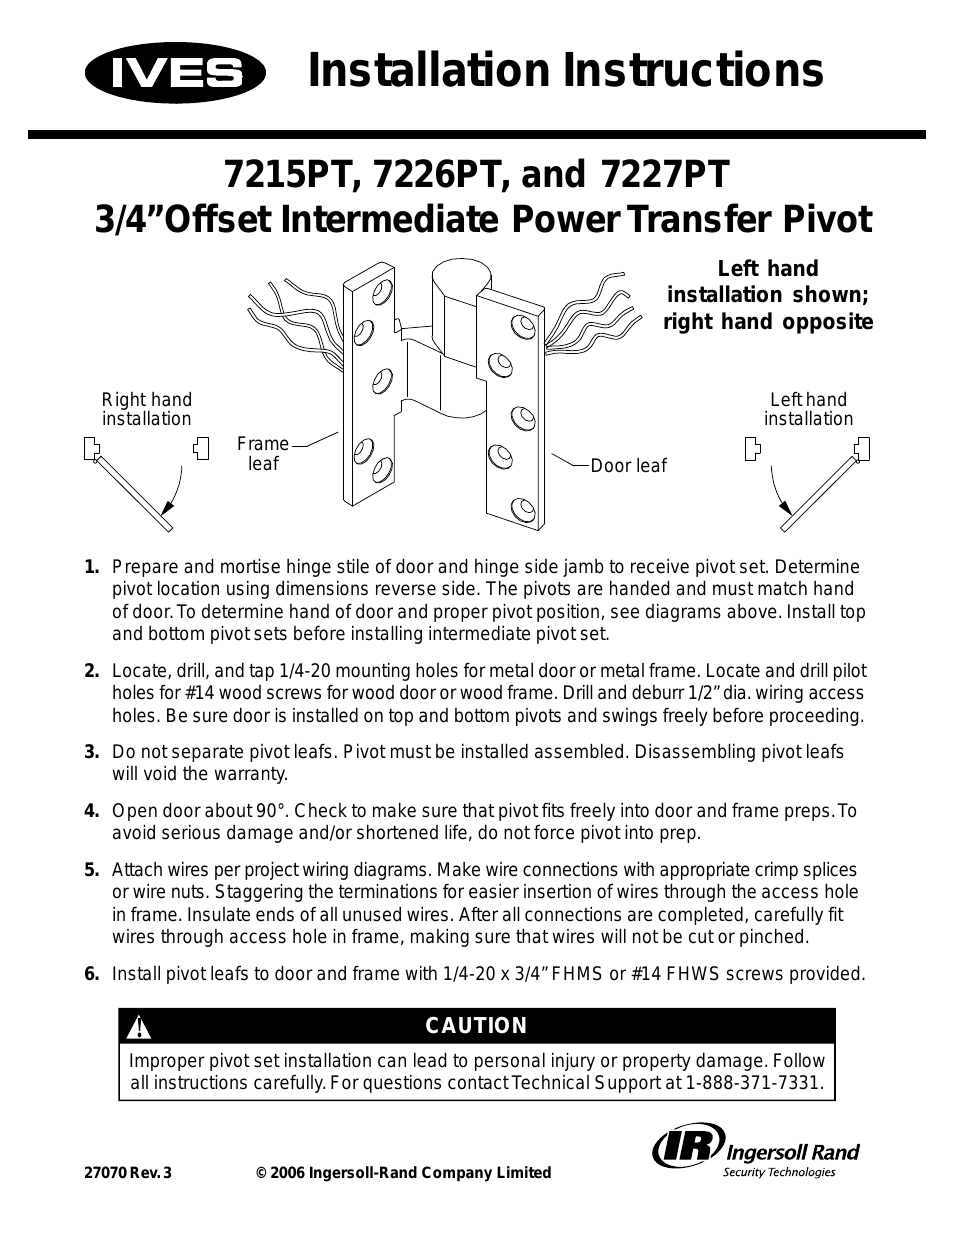 Offset Intermediate Power Transfer Pivot 7215PT